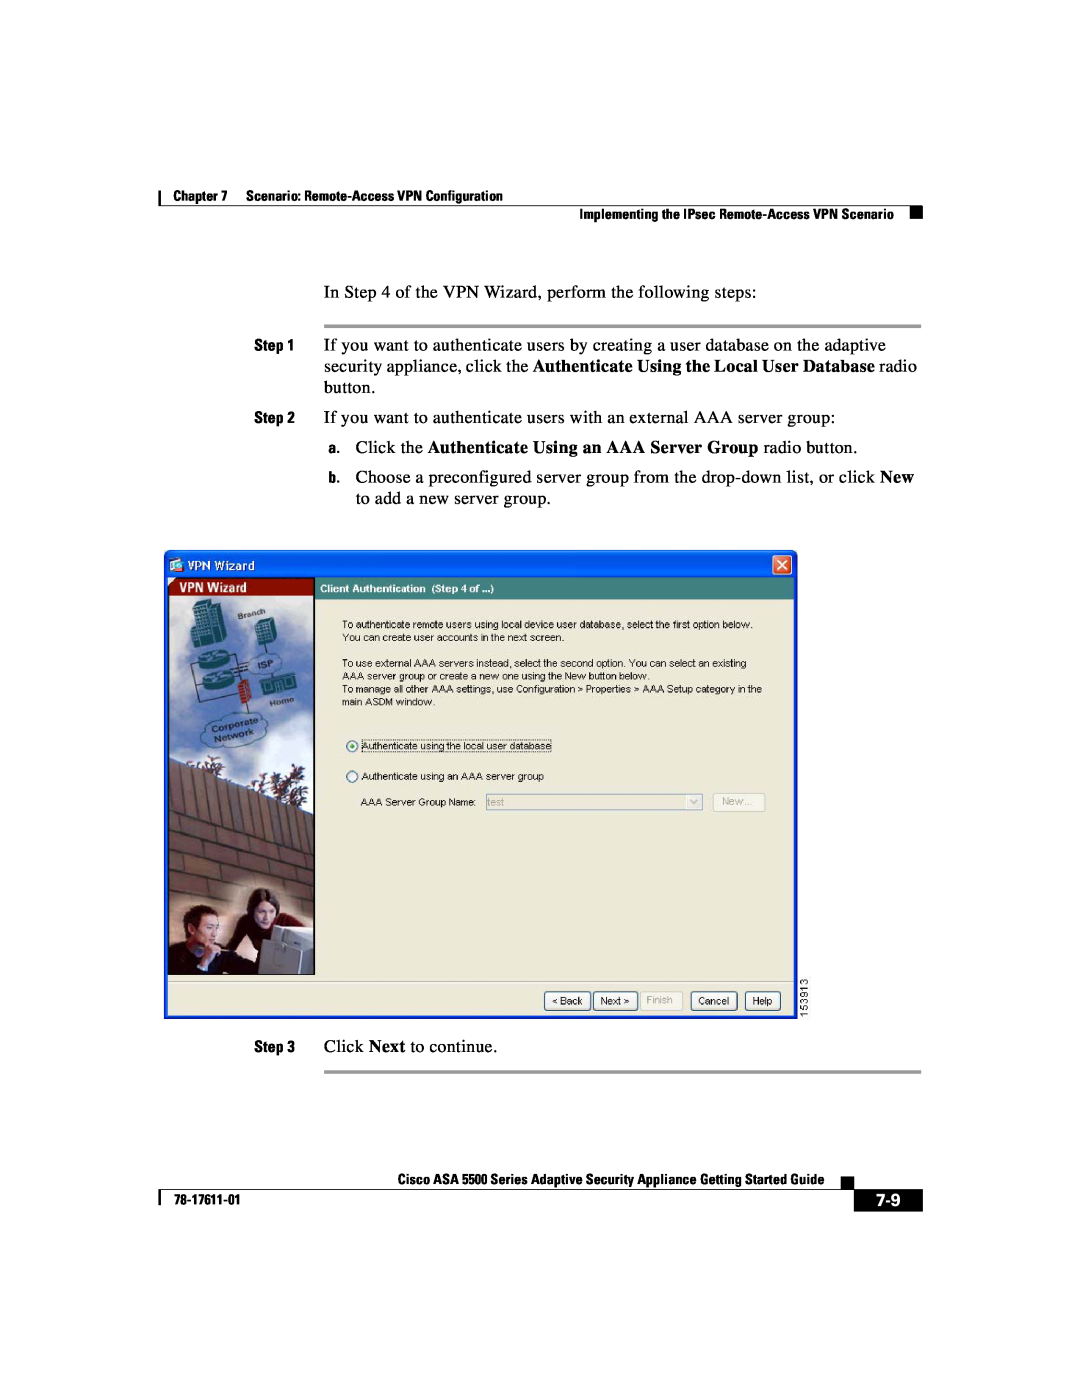 Cisco Systems ASA 5500 manual Click Next to continue 